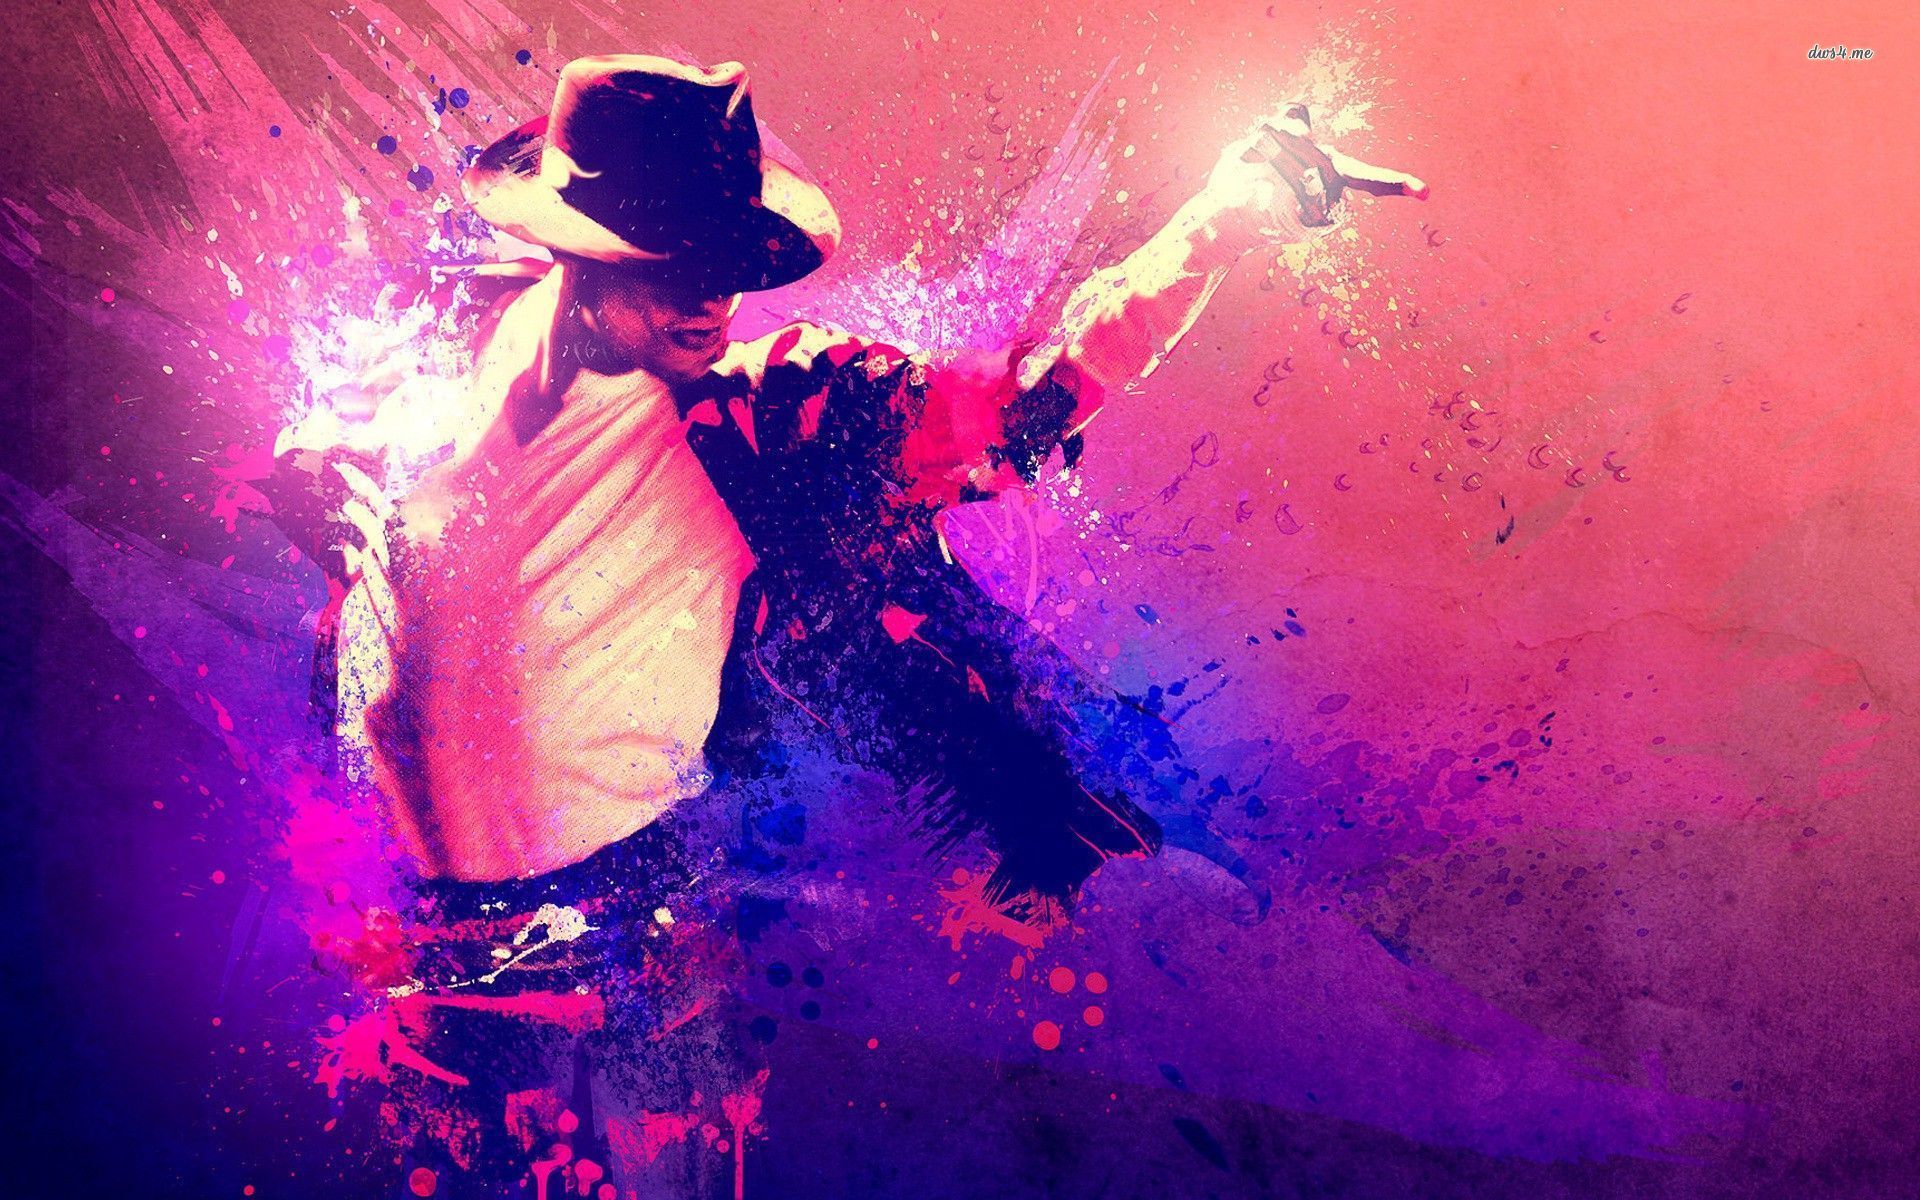 Michael Jackson Wallpaper 7zxuh2n 4usky